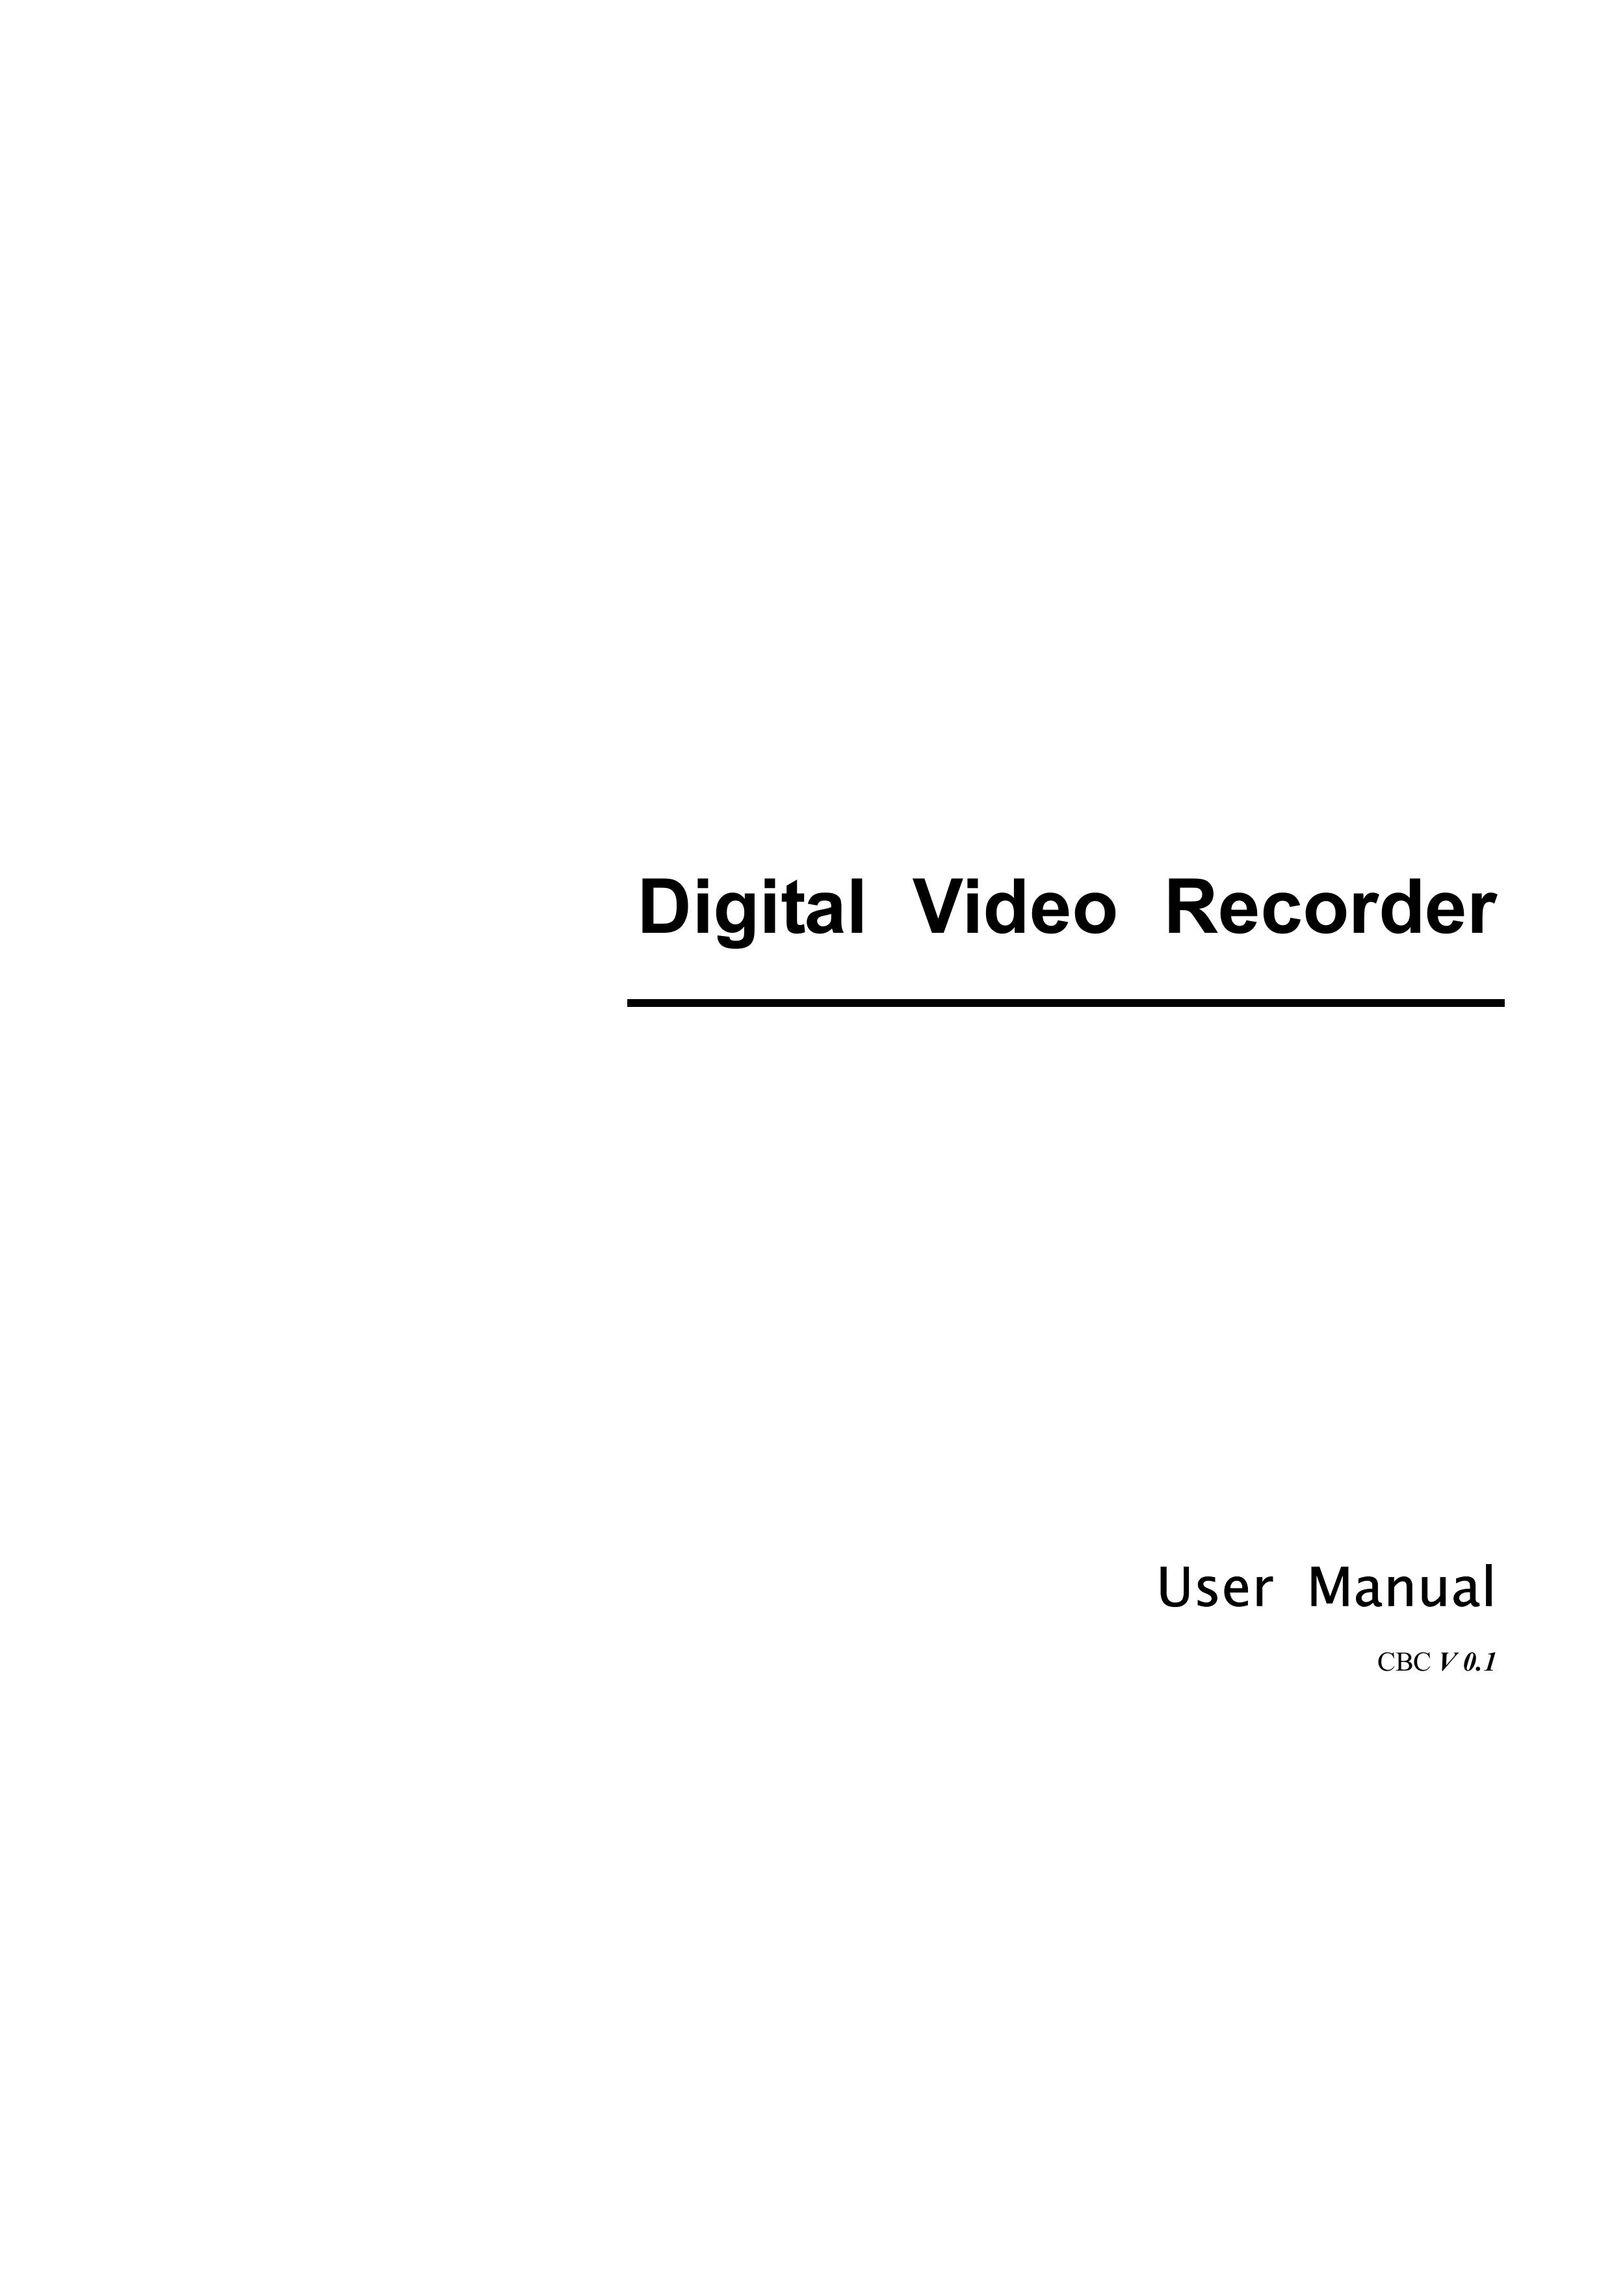 CBC CBC V 0.1 DVR User Manual